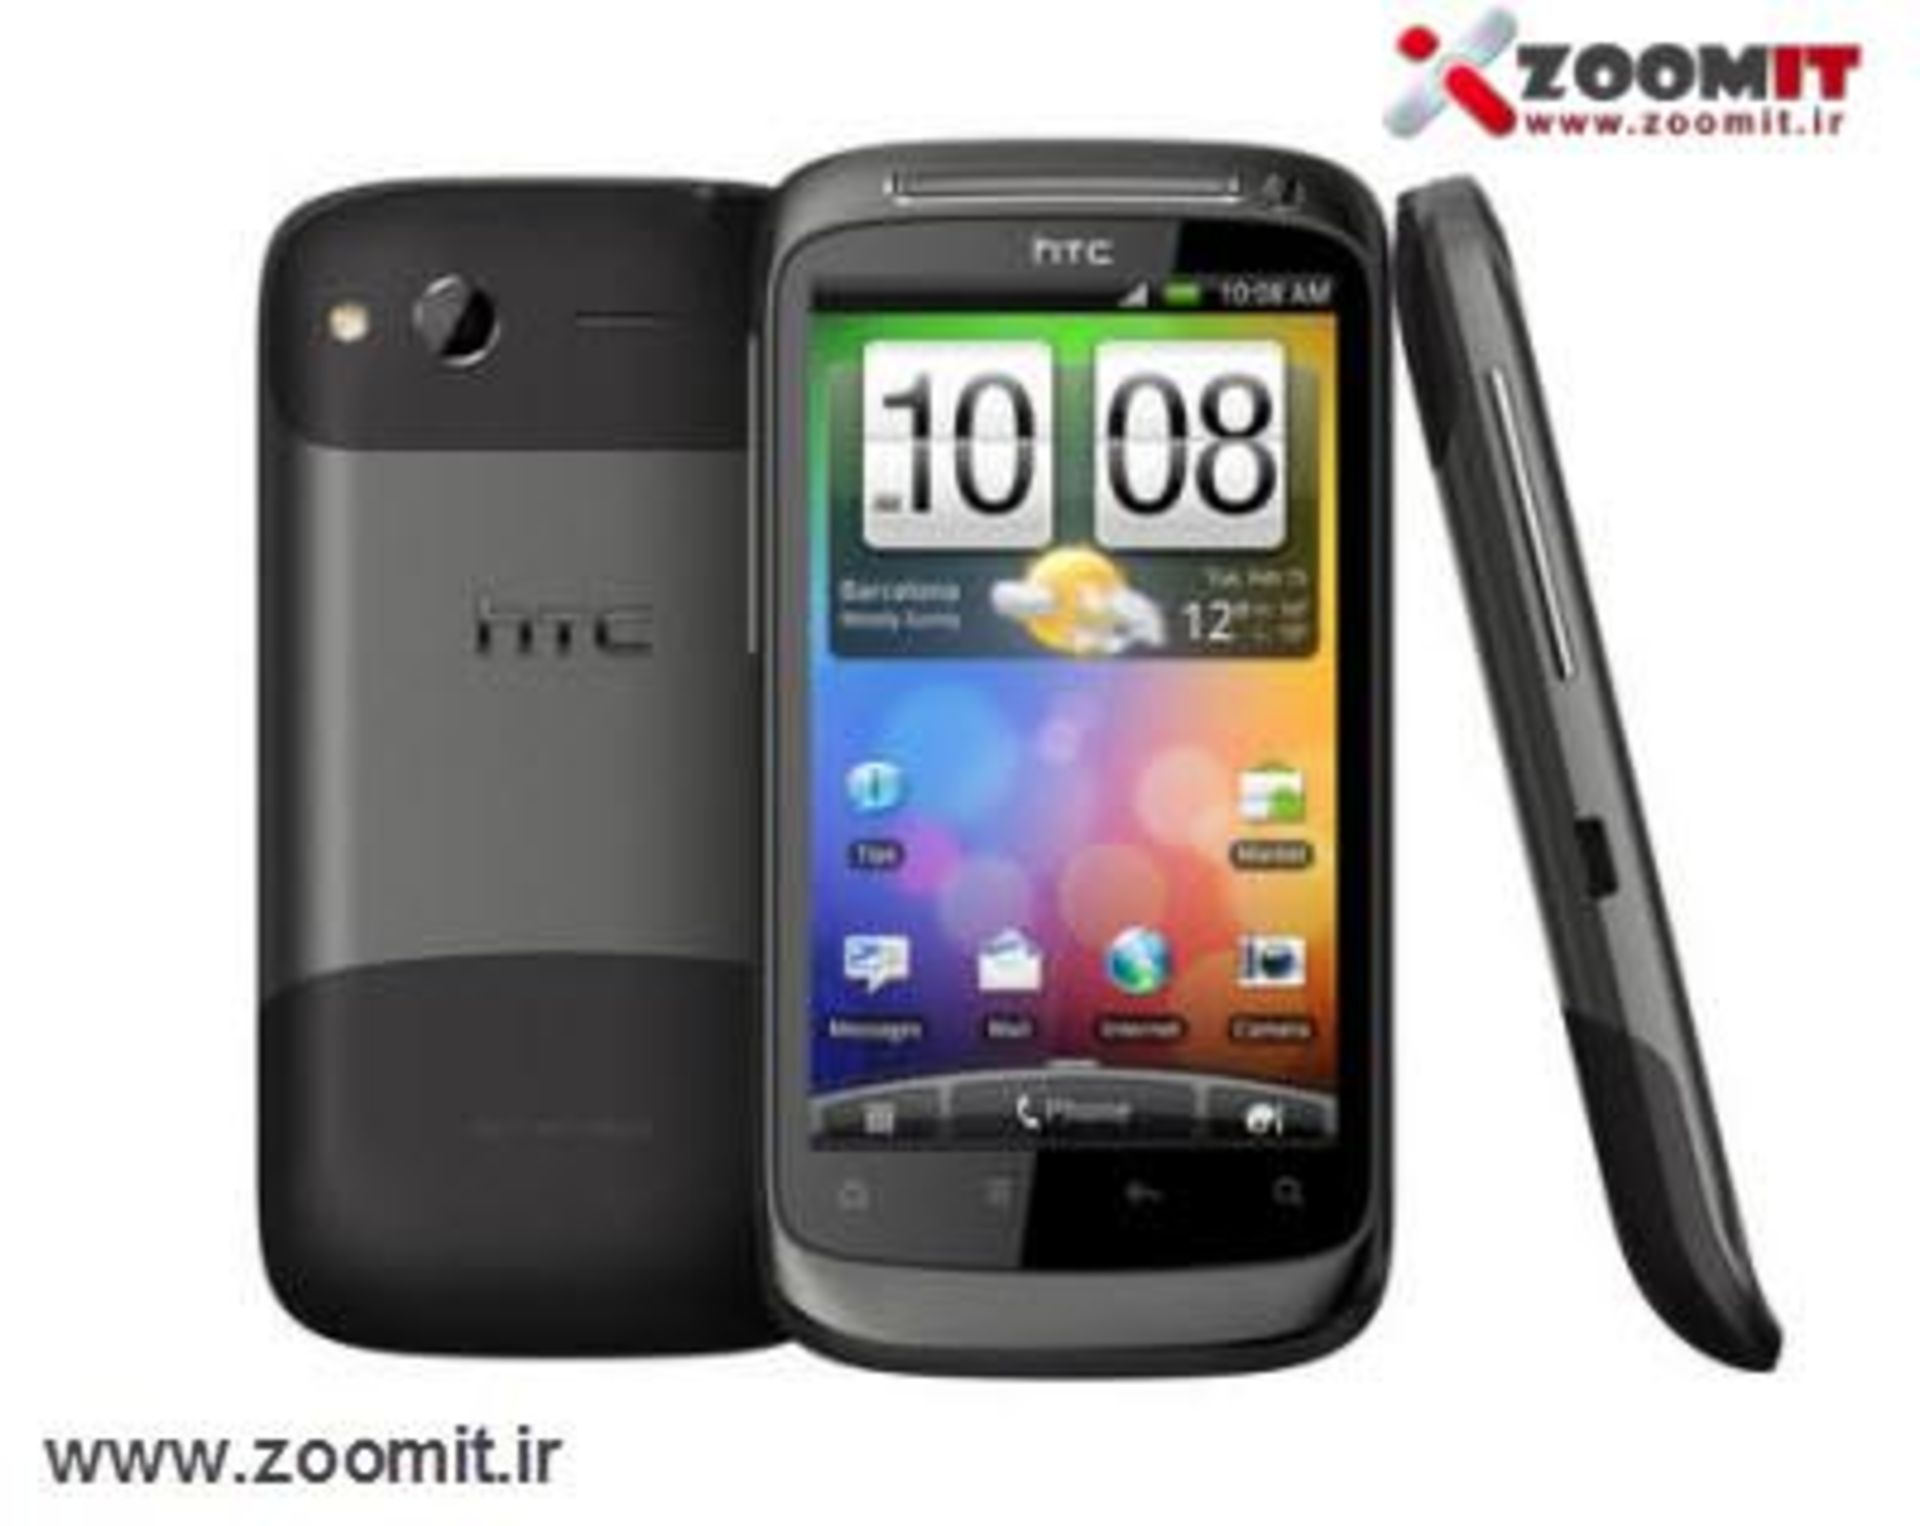 compair-4-best-mobiles-HTC-Desire-S-1